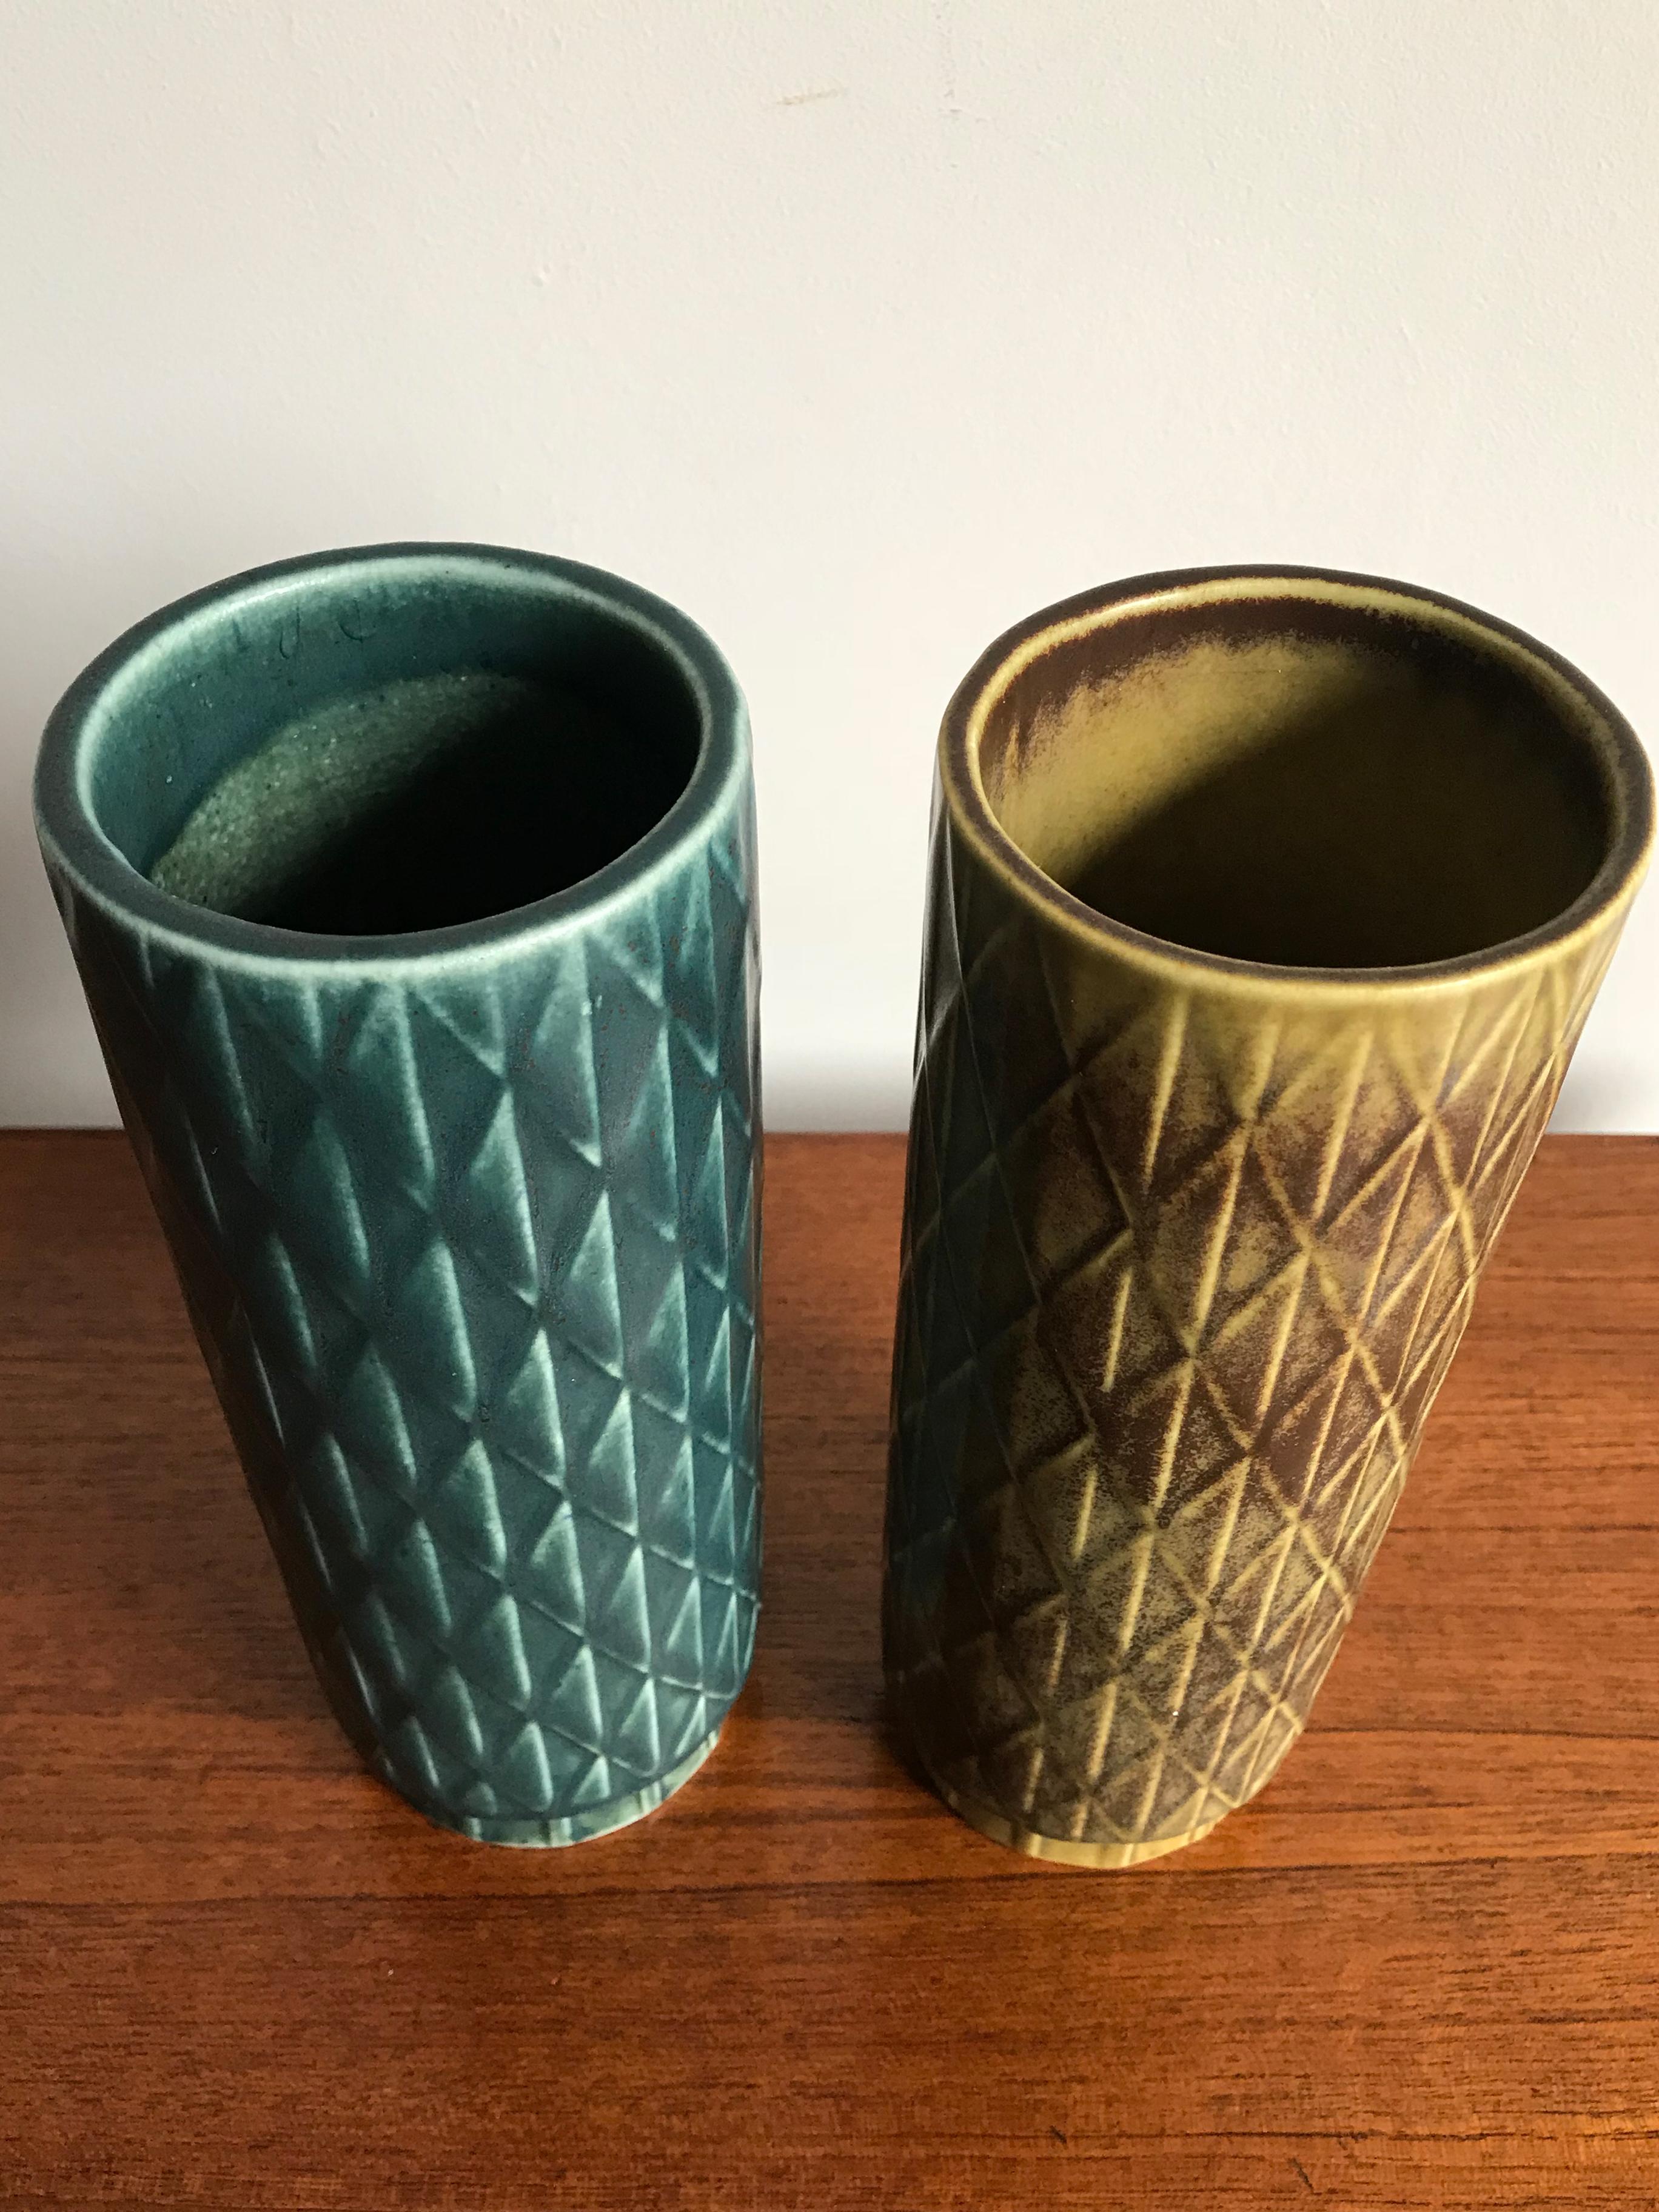 1960s Scandinavian stoneware vases set designed by Gunnar Nylund for Rörstrand, made in Sweden, marked on the bottom, in matte enamel.
Dimensions: height 22 cm, diameter 8 cm.